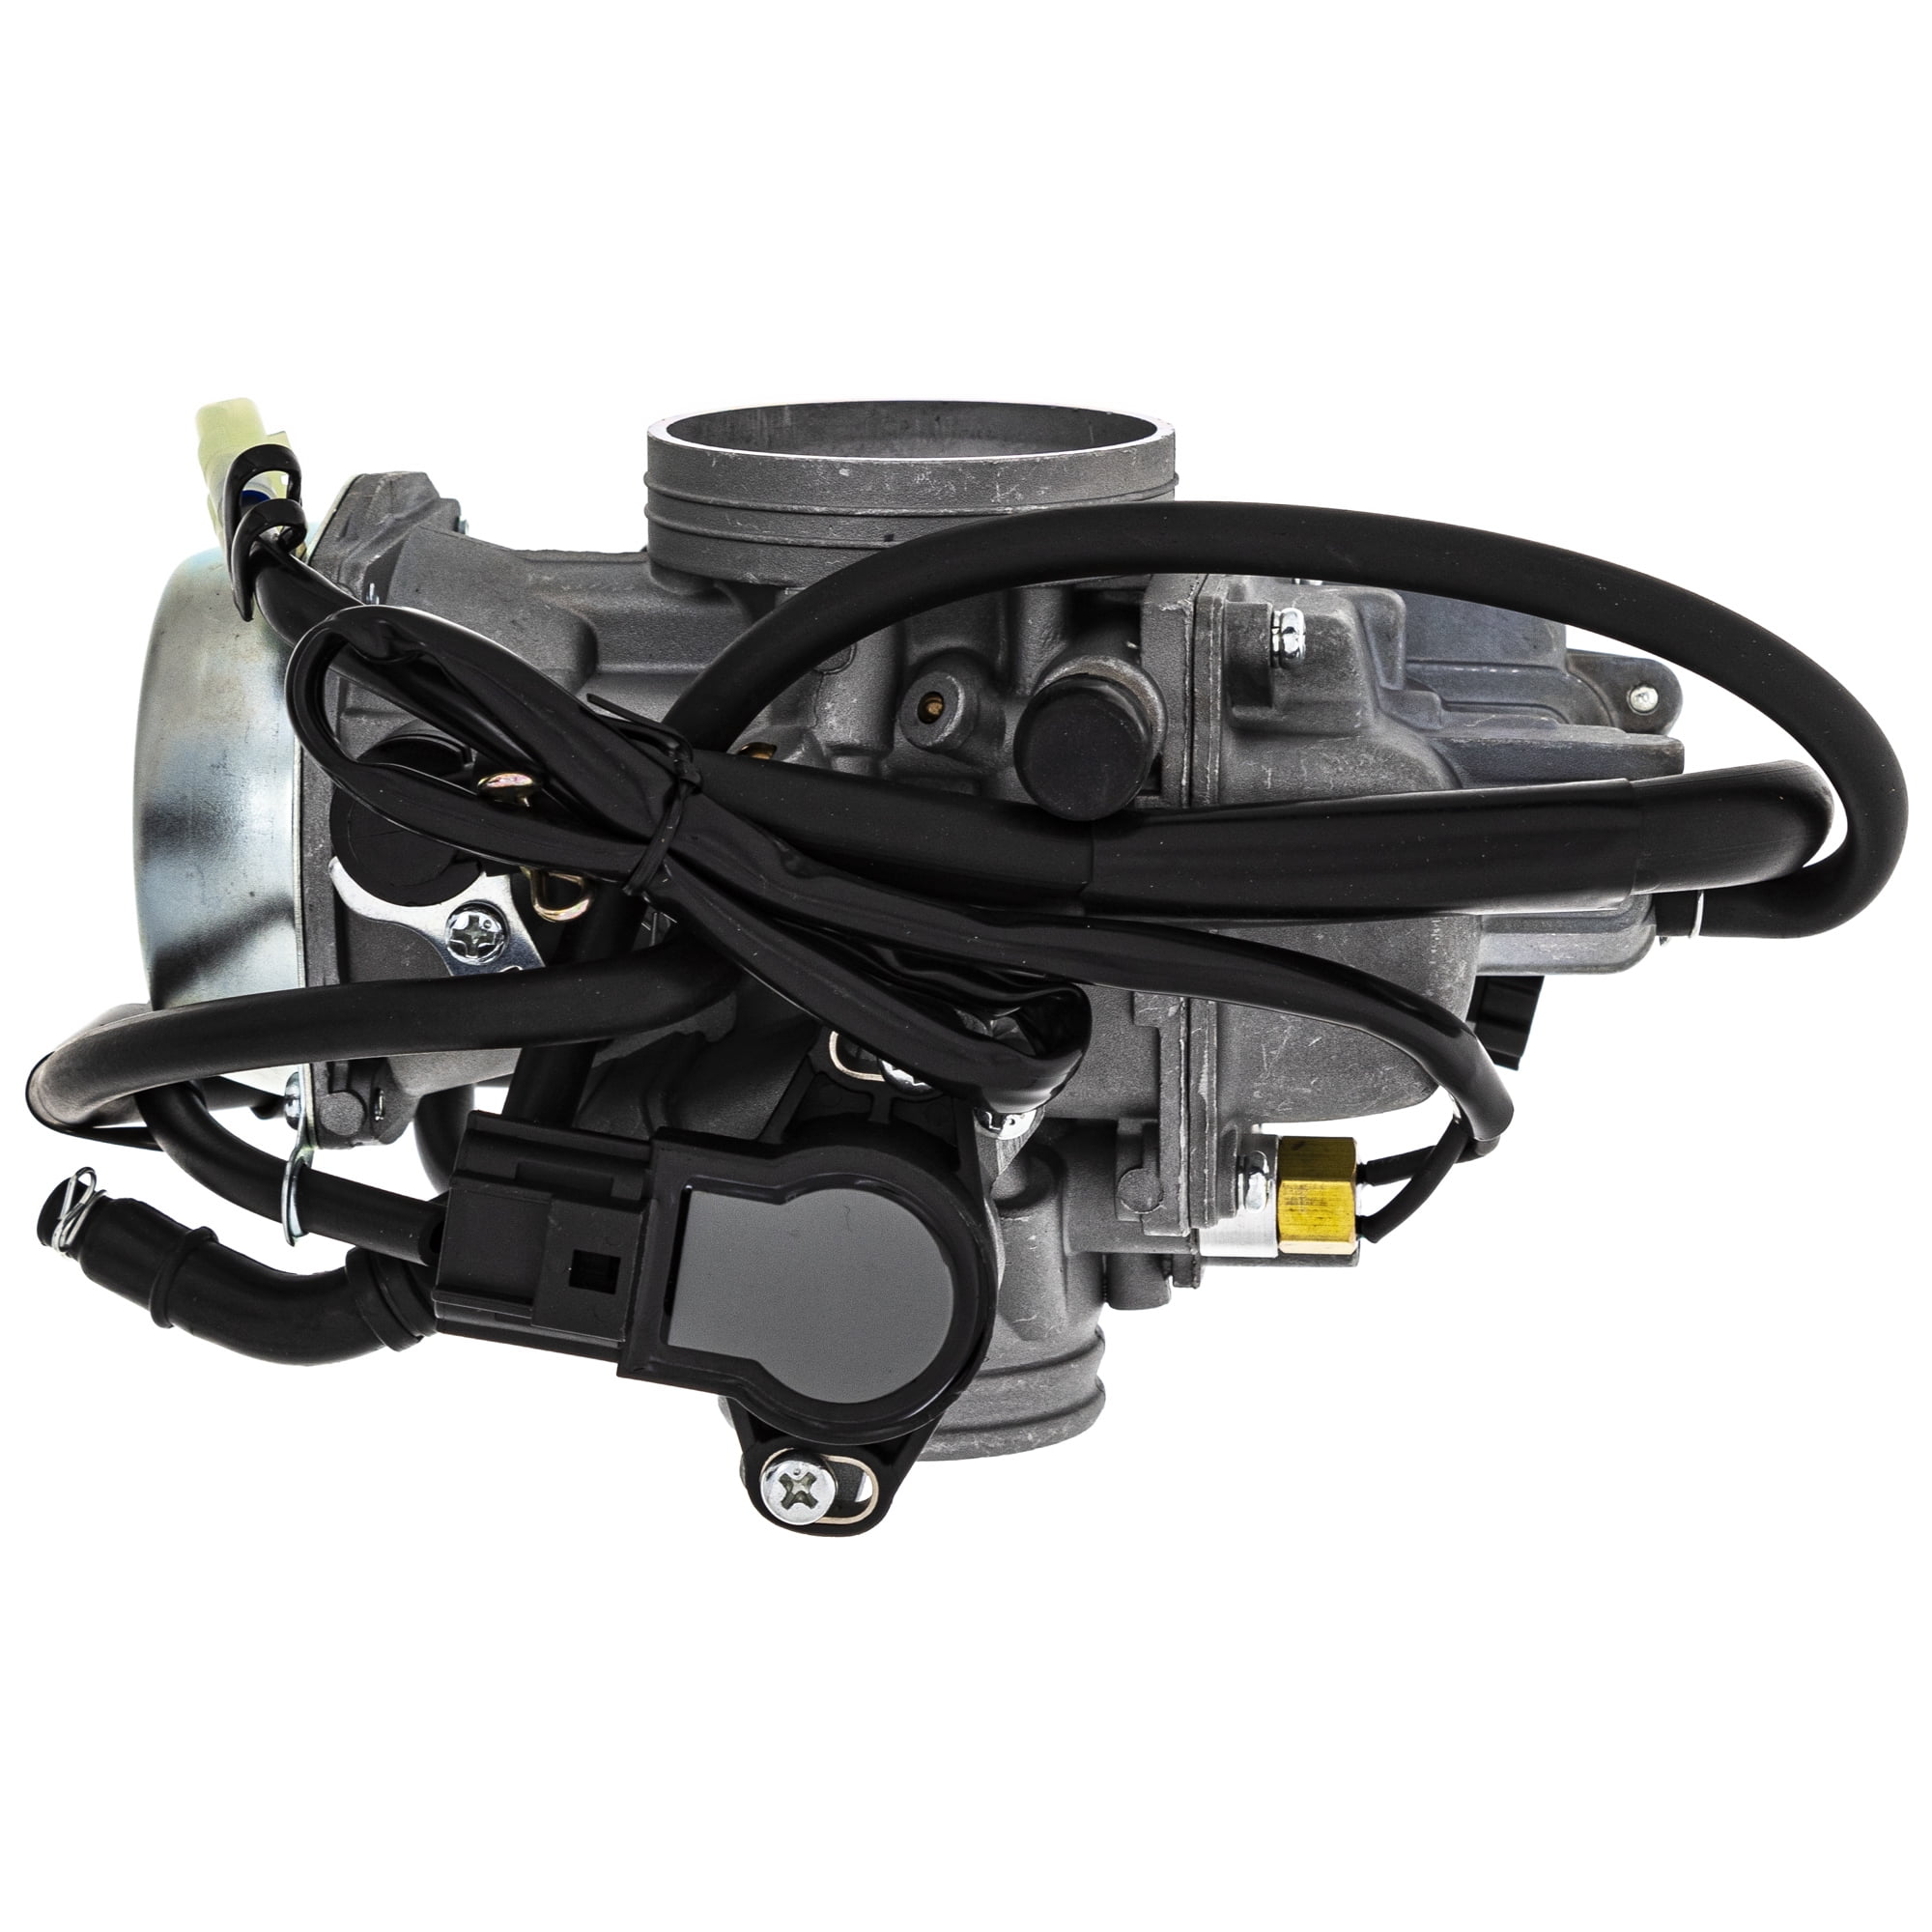  NICHE Carburetor Assembly For Honda Rincon 650 TRX650FA  TRX650FGA 16100-HN8-013 ATV : Automotive